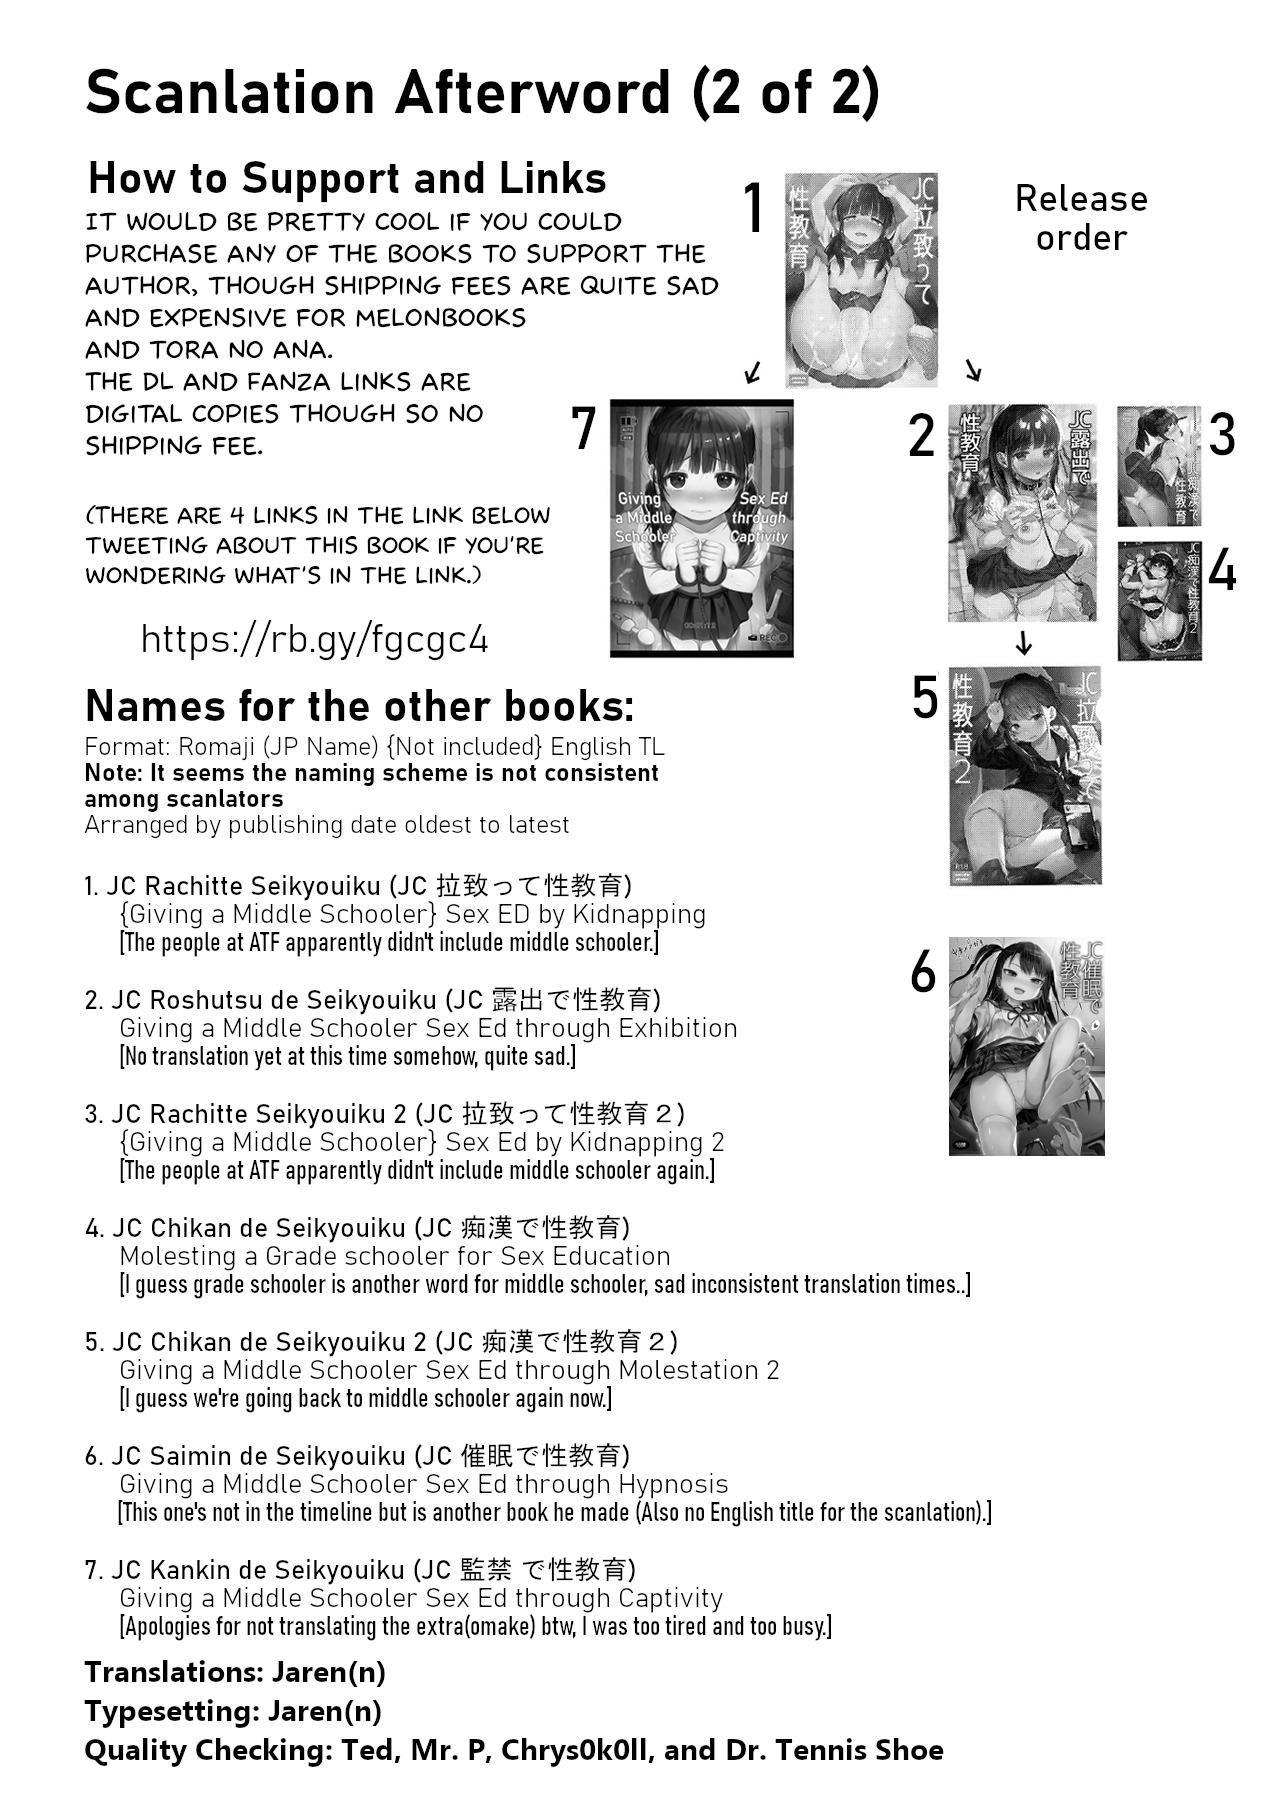 Sologirl JC Kankin de Seikyouiku | Giving a Middle Schooler Sex Ed through Captivity - Original Shaking - Page 39